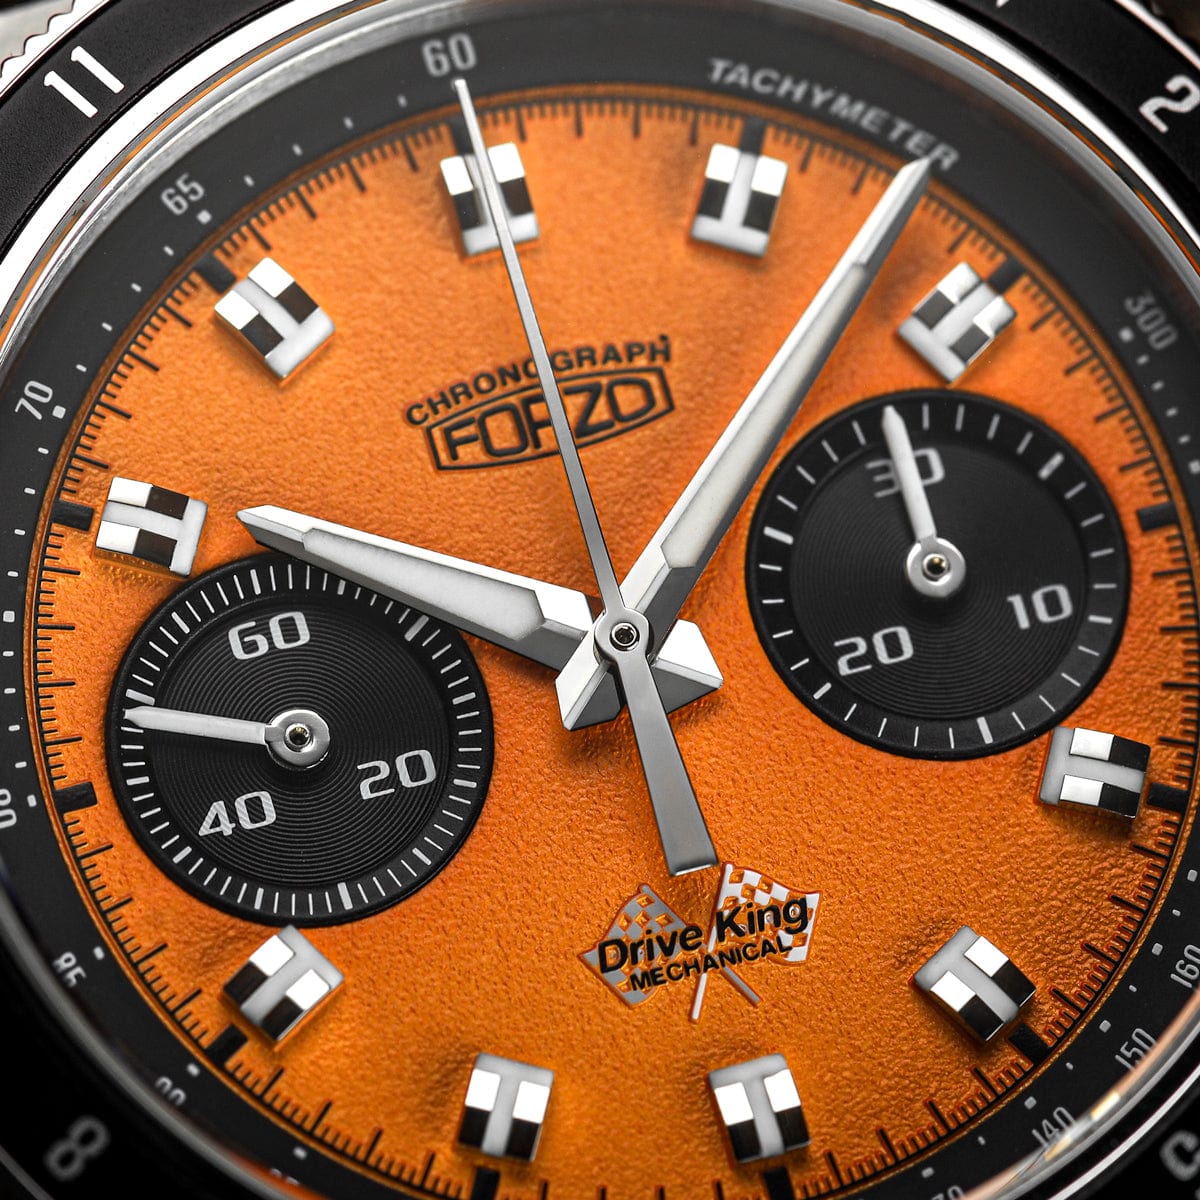 FORZO Drive King Mechanical Chronograph In Orange